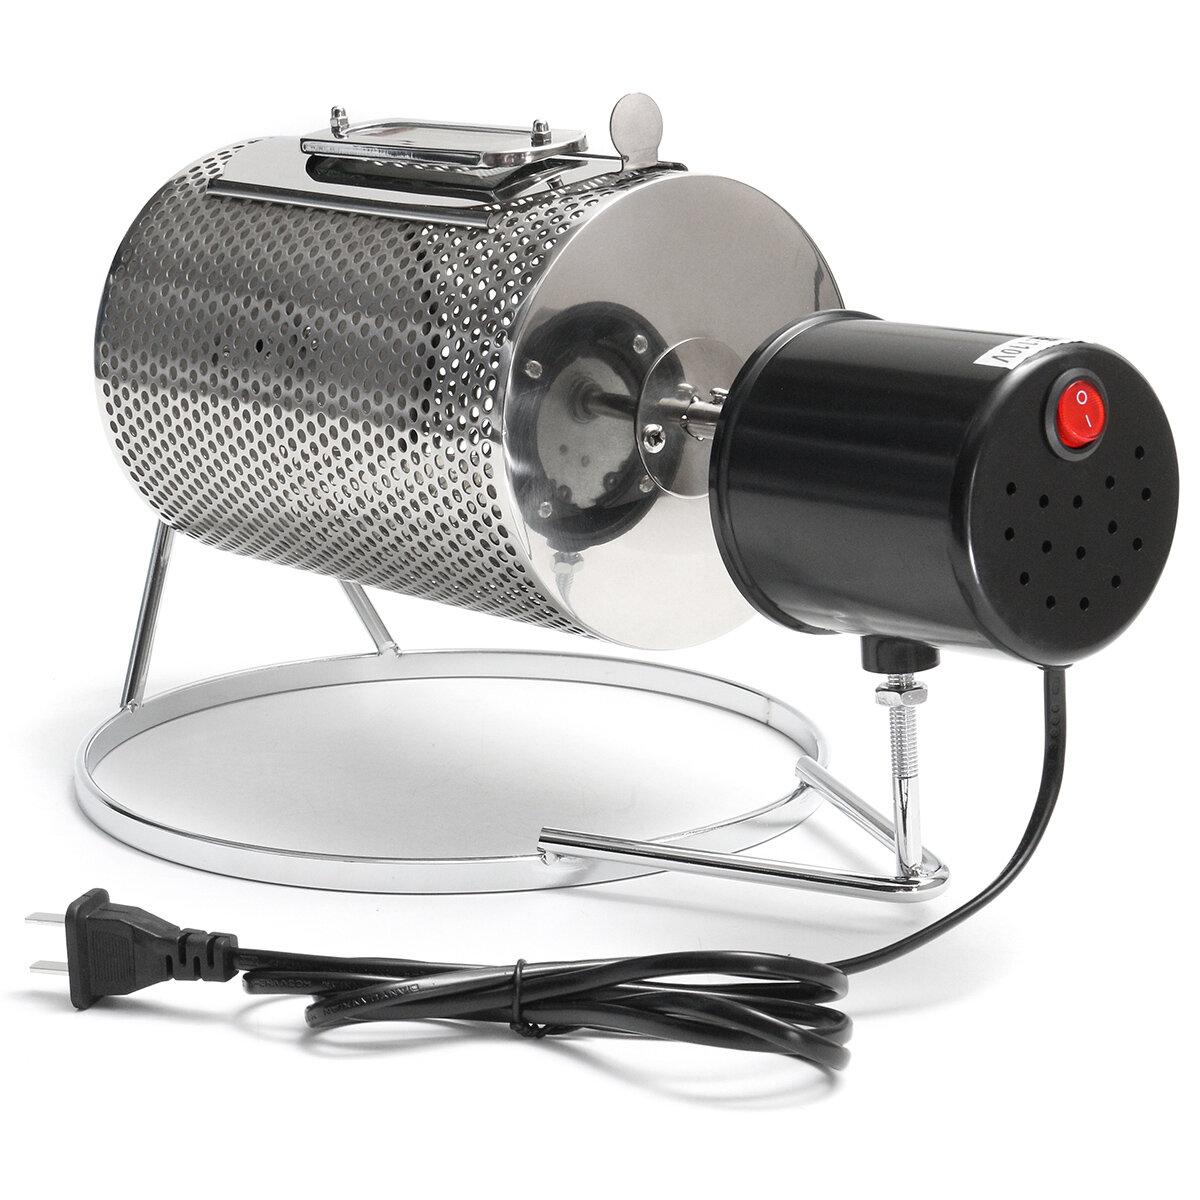 Stainless Steel Coffee Bean Roasting Machine Coffee Roaster Roller Baker 220V Tools